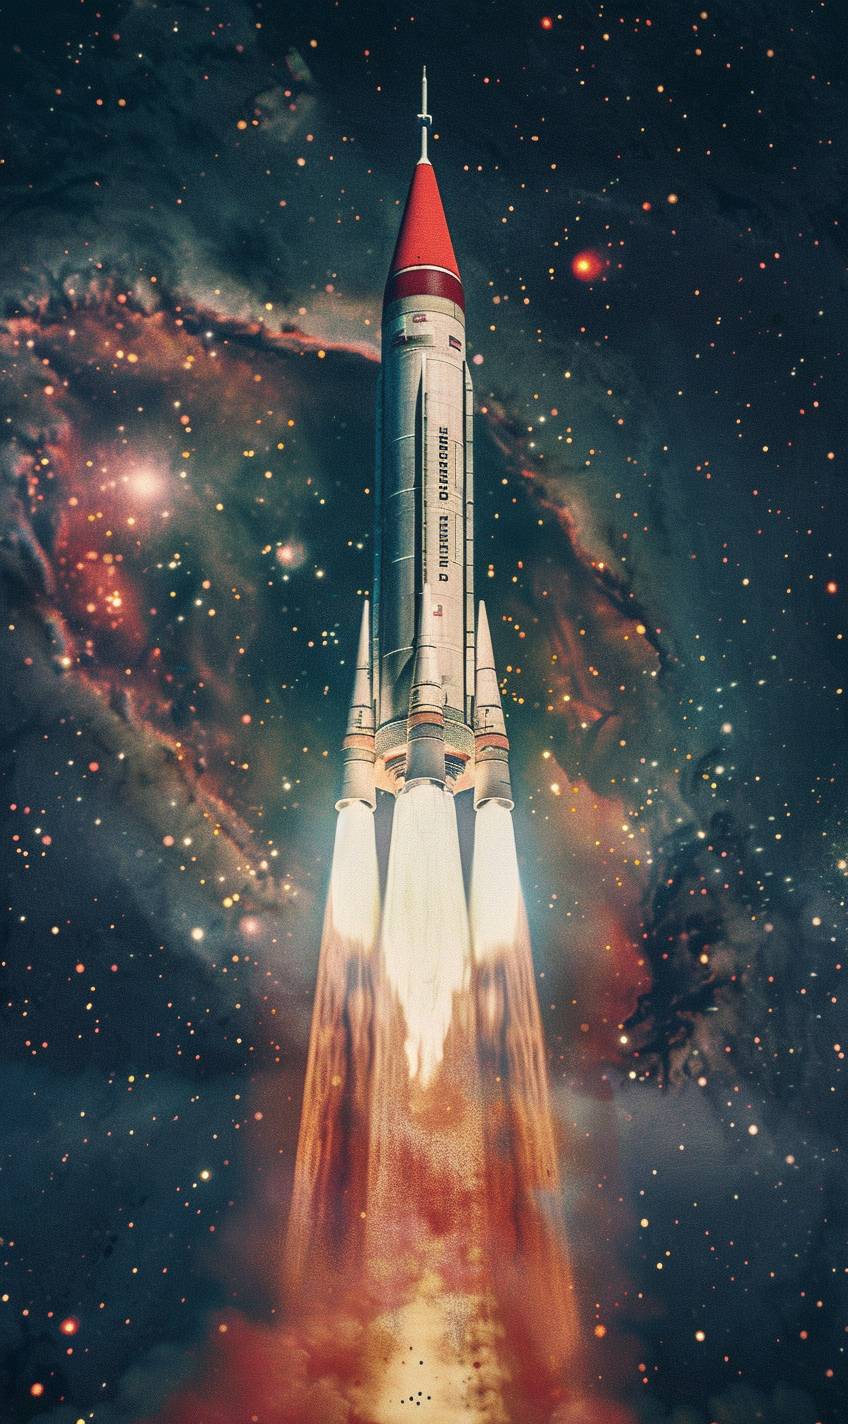 James Bidgood's photograph of a space rocket